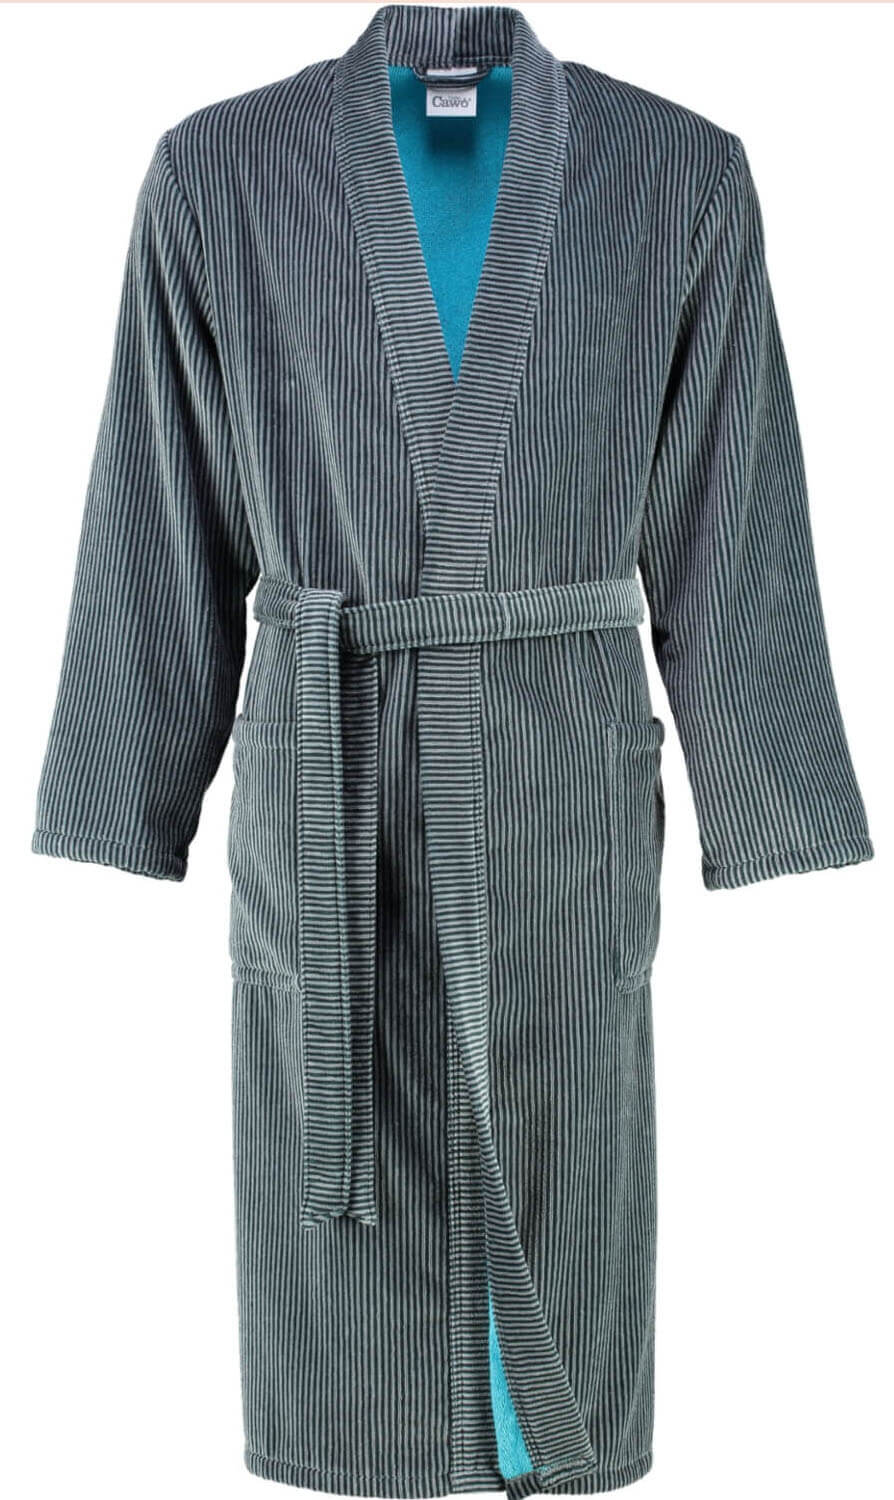 Банный халат Kimono Anthrazit Turkis